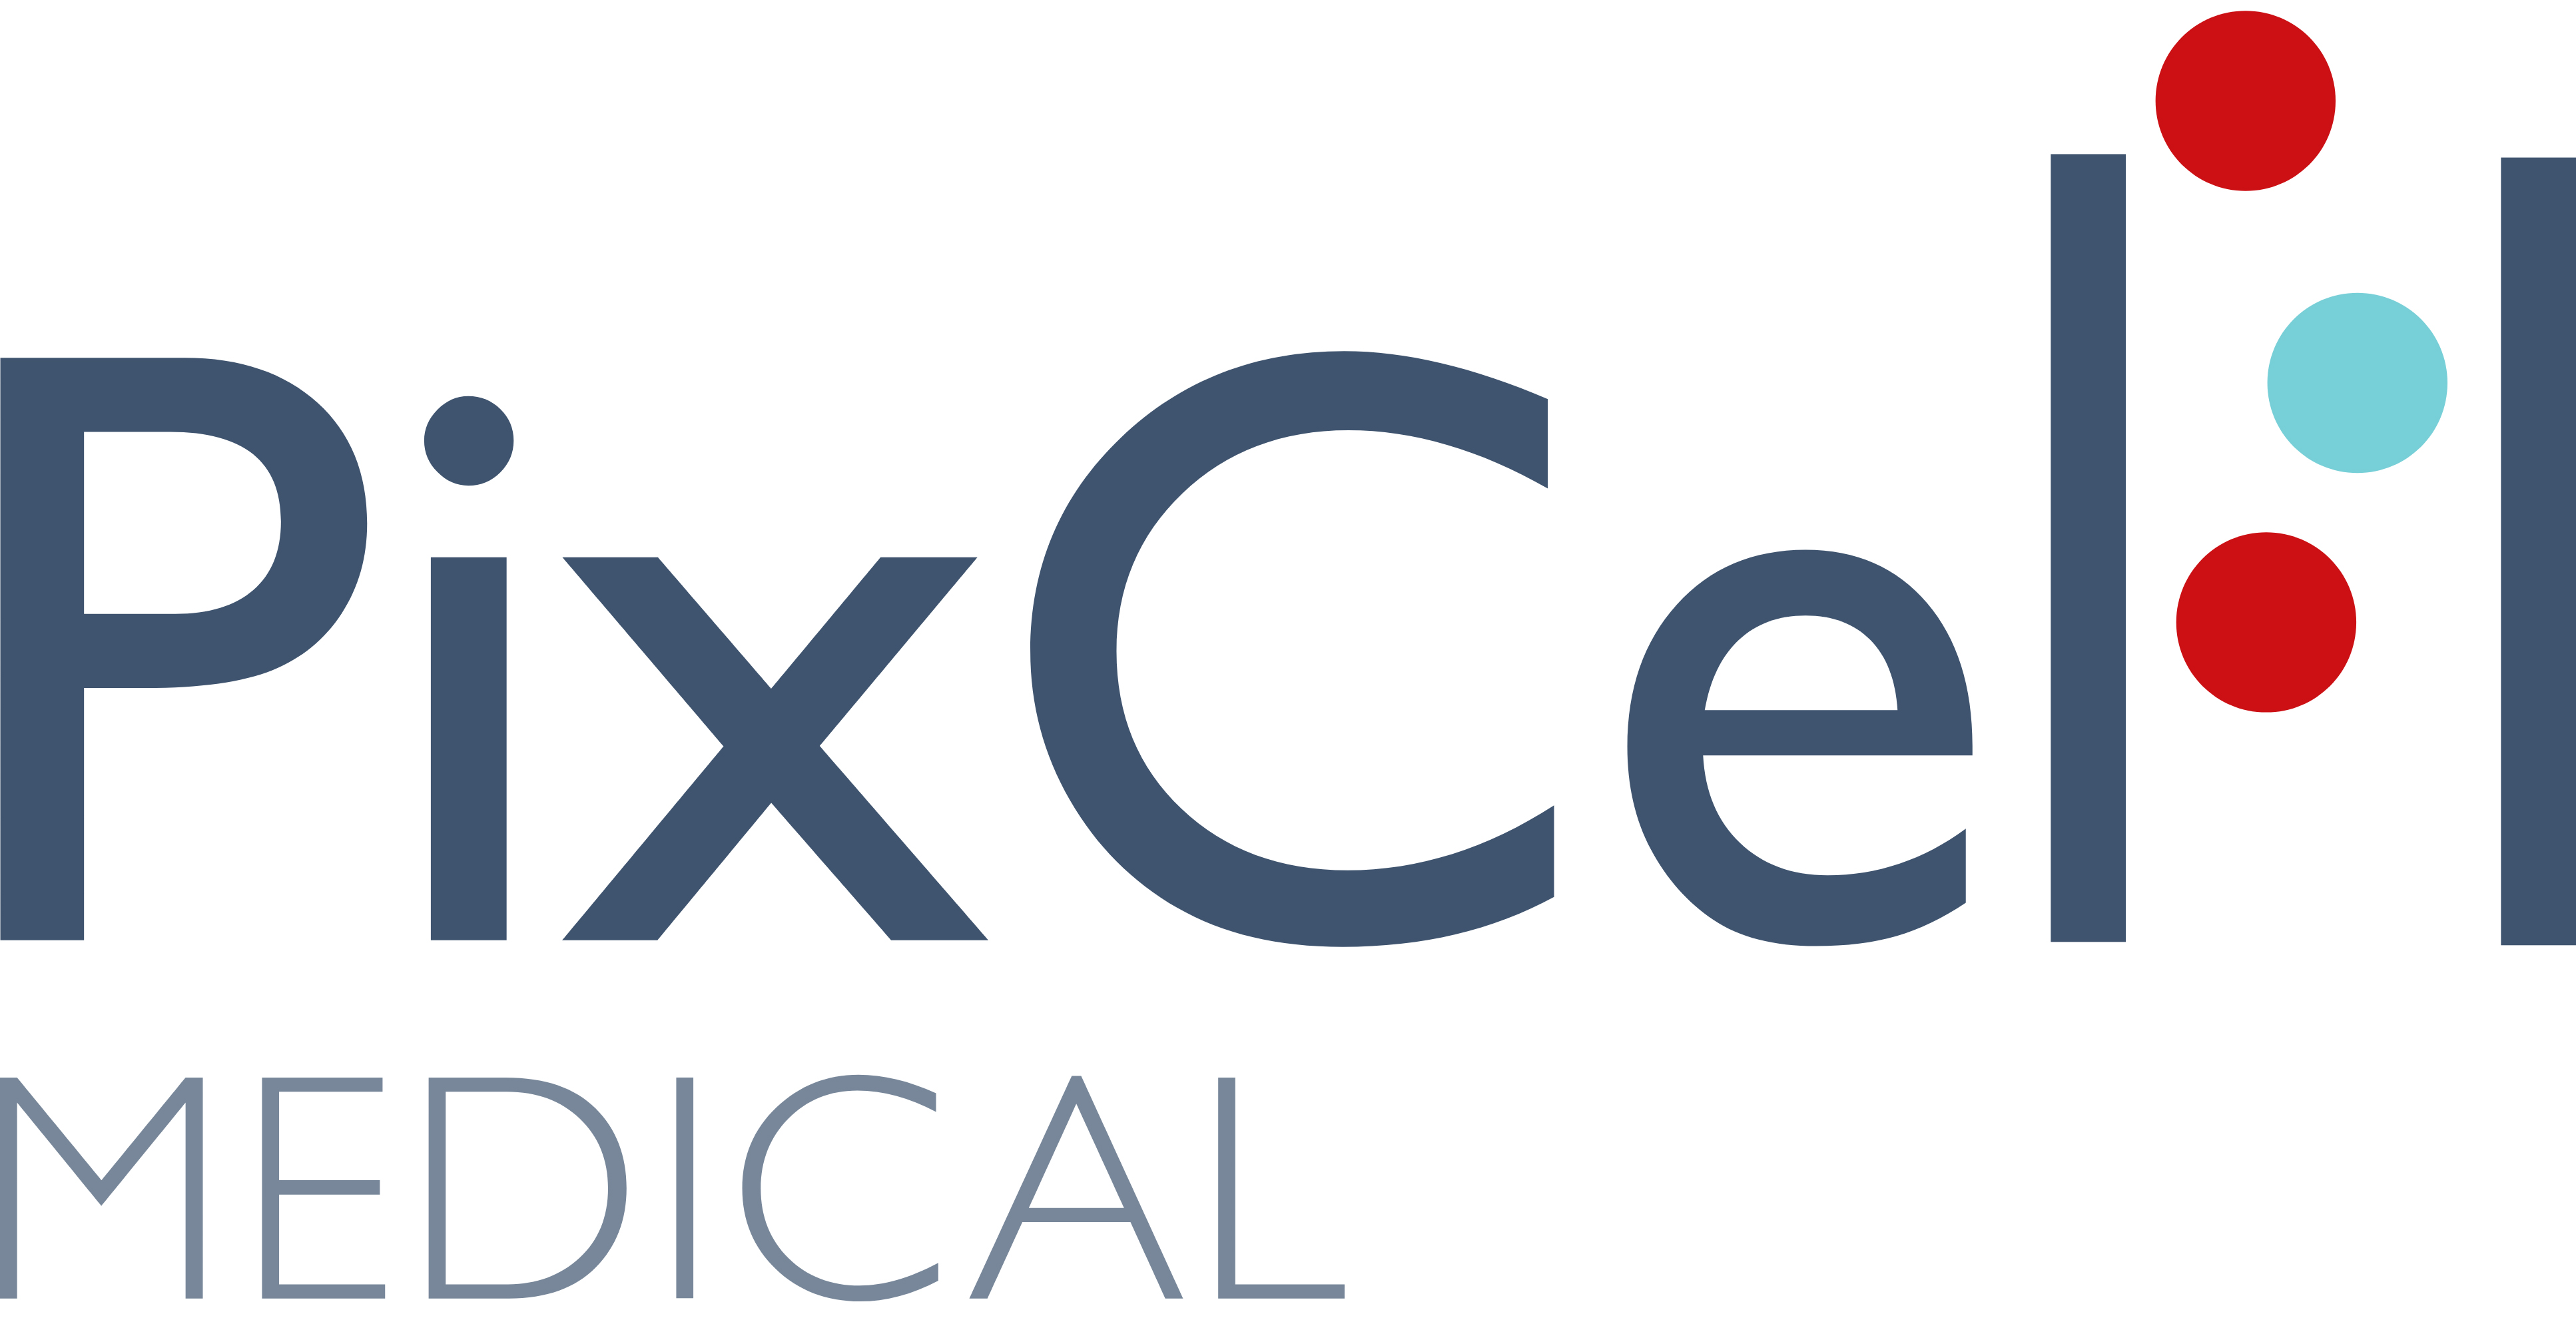 Pixcell Logo